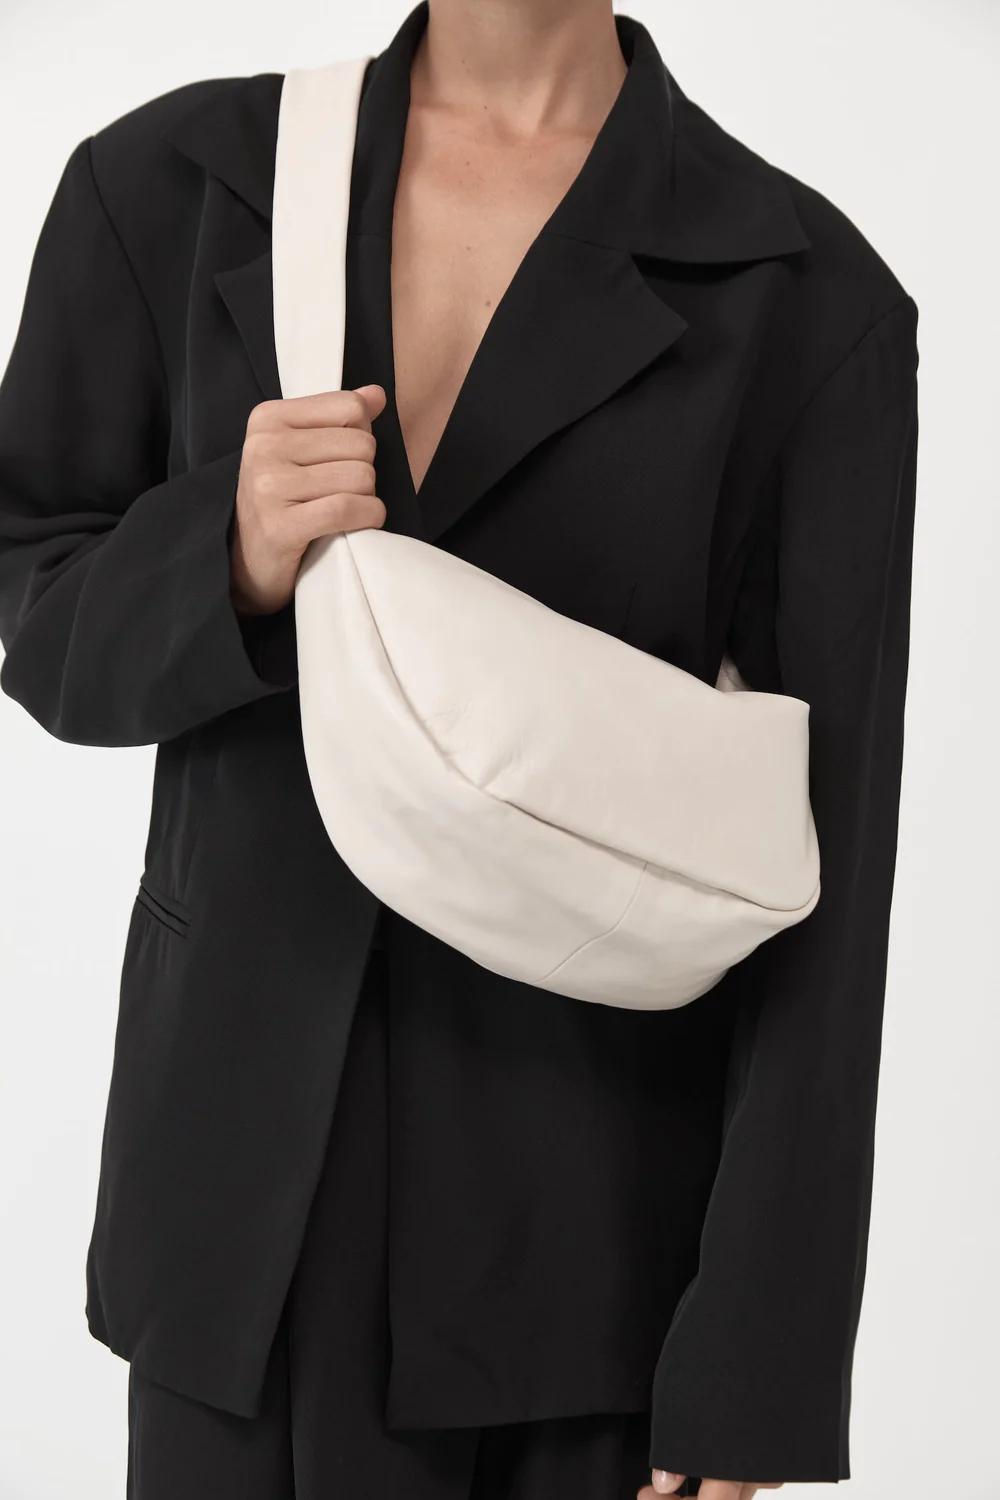 Product Image for Soft Crescent Bag, Ecru